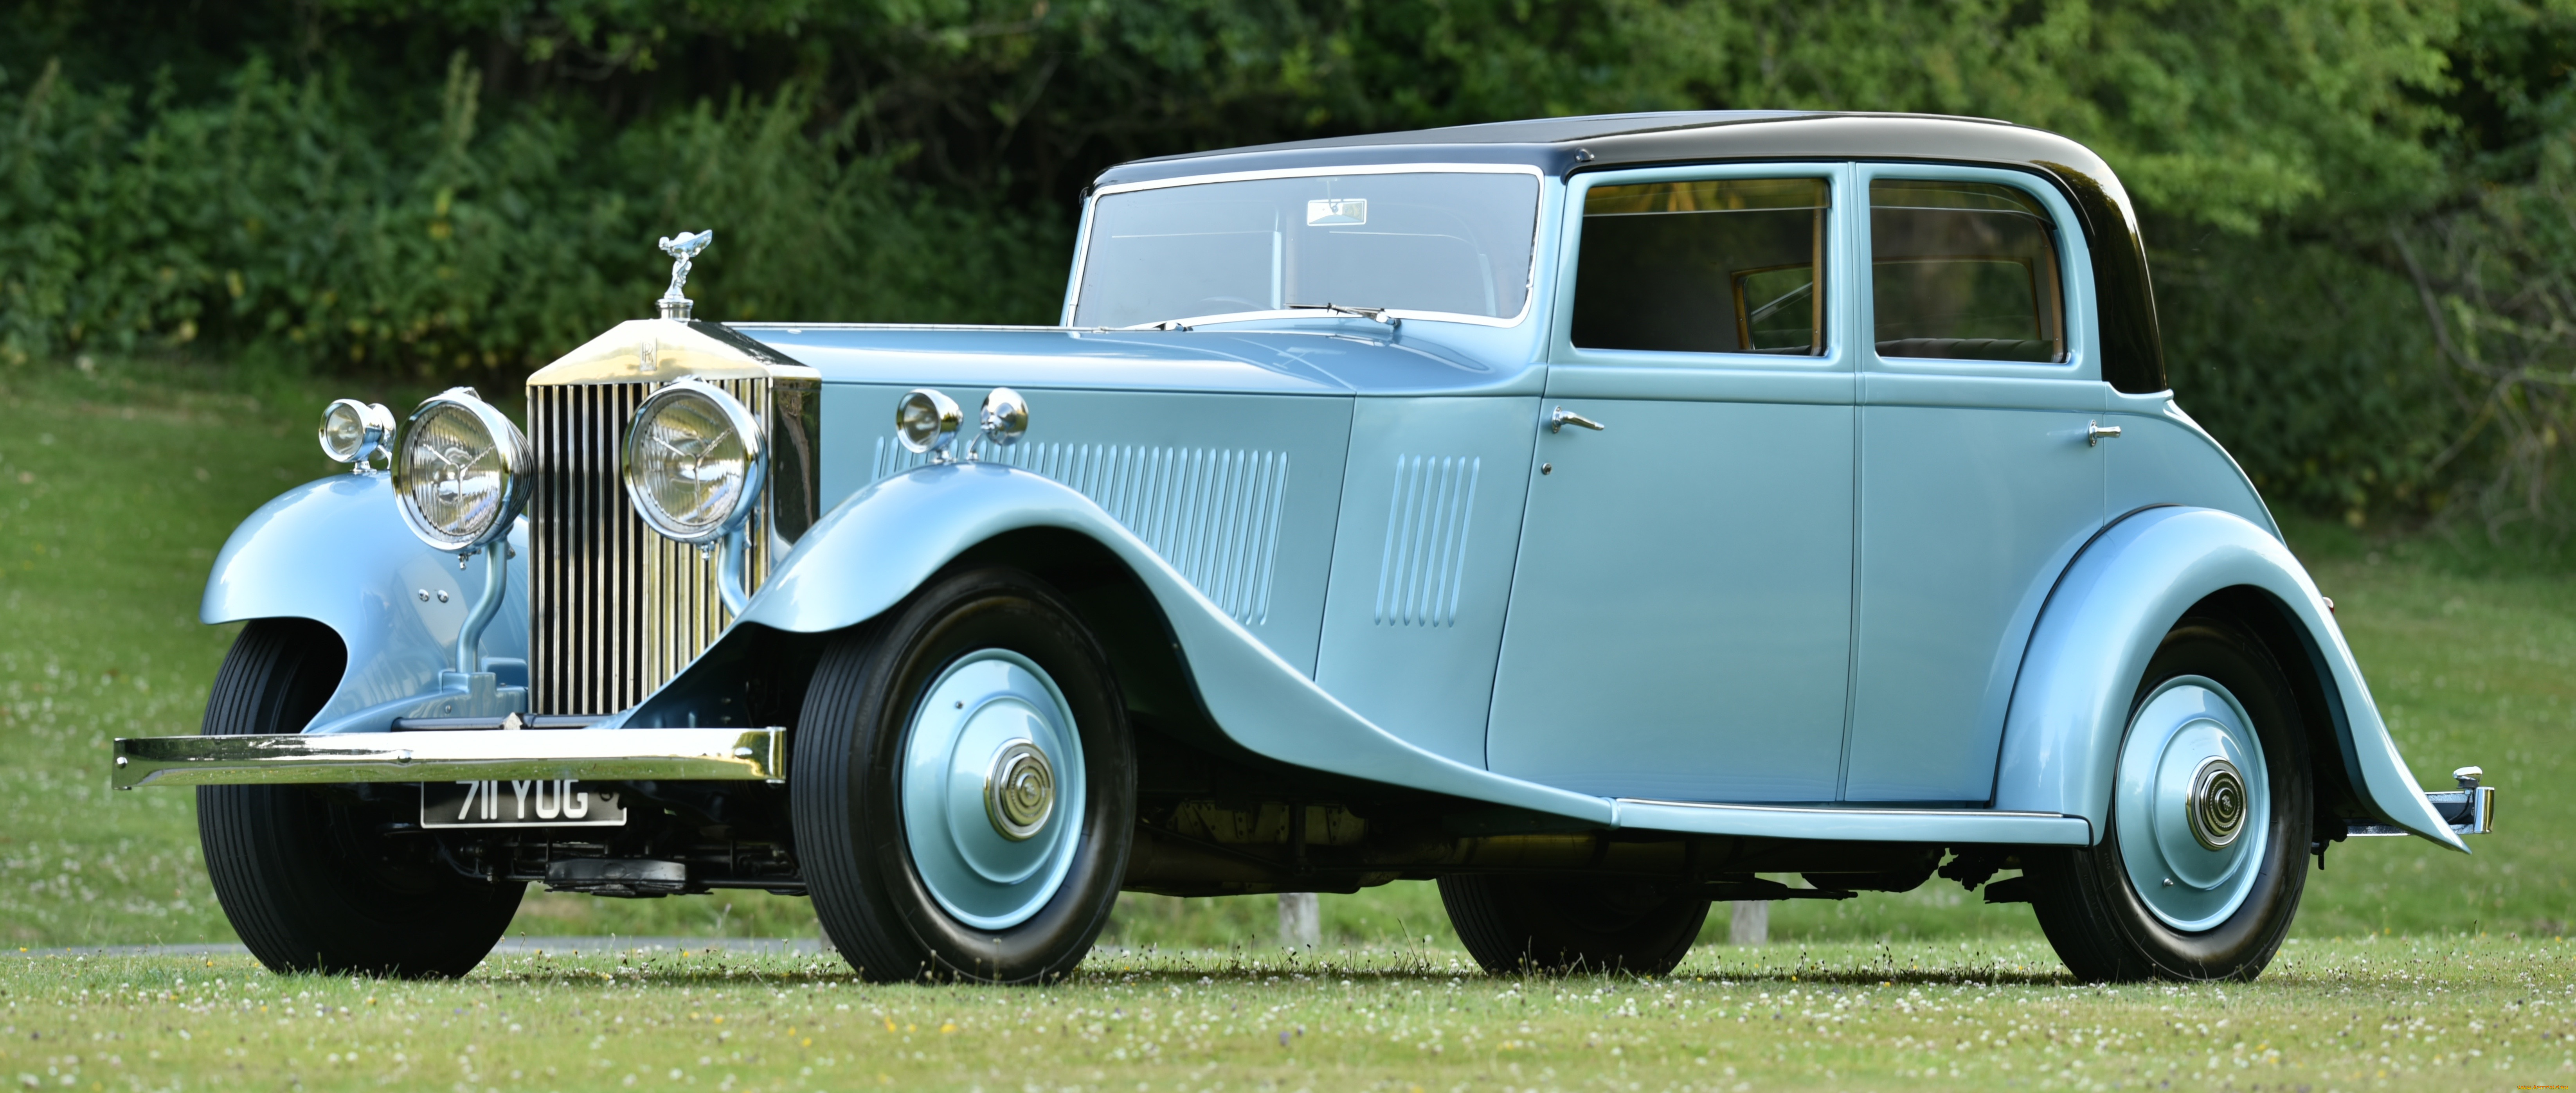 rolls-royce, phantom, ii, continental, 711yug, 1933, автомобили, классика, ii, phantom, rolls-royce, 1933, continental, 711yug